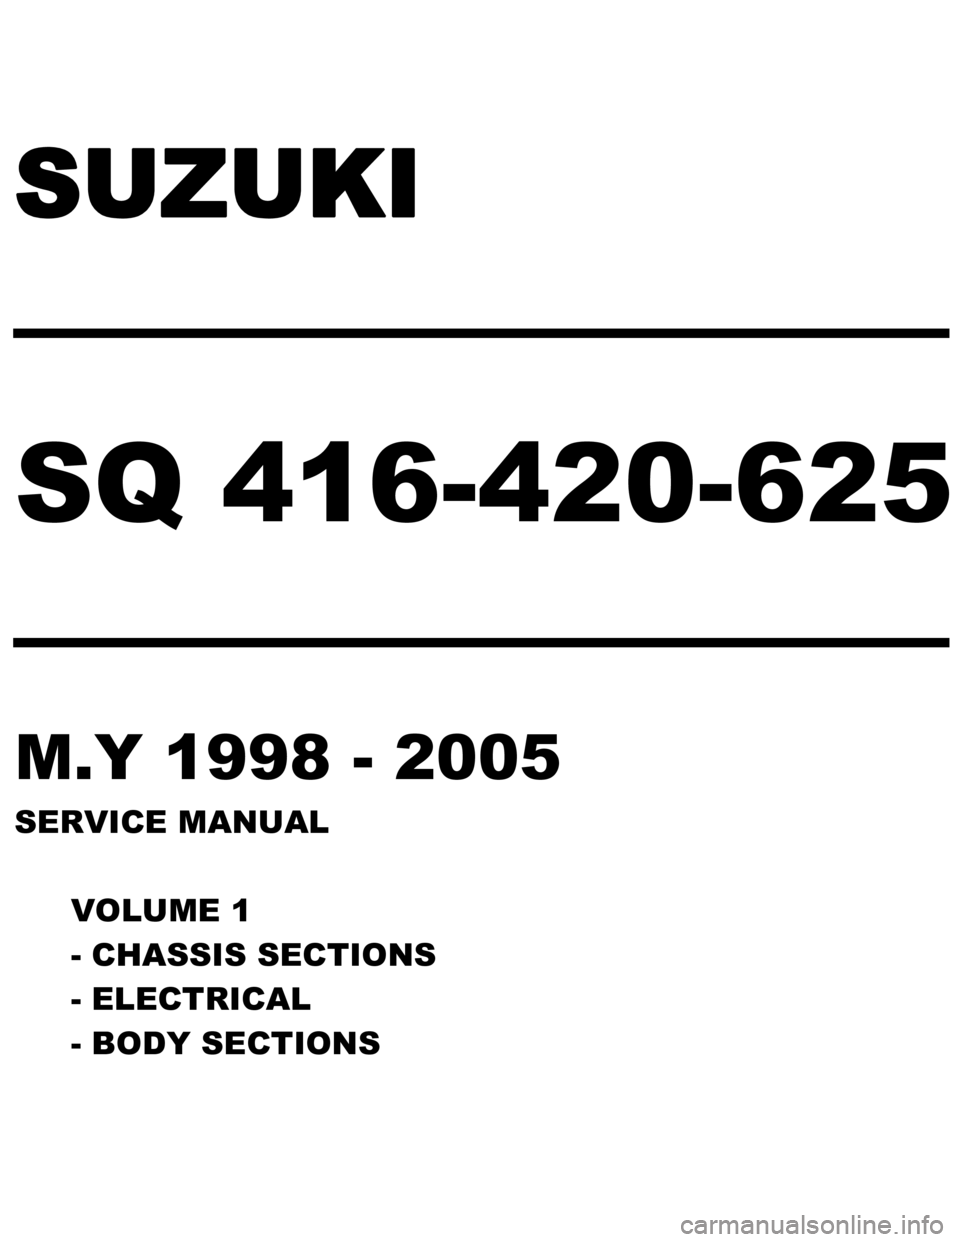 SUZUKI GRAND VITARA 1998 2.G Service Workshop Manual 
SUZUKI  
──────────── 
SQ 416-420-625 
──────────── 
M.Y 1998 - 2005 
SERVICE MANUAL   
VOLUME 1 
- CHASSIS SECTIONS 
- ELECTRICAL 
- BODY SECTIONS  